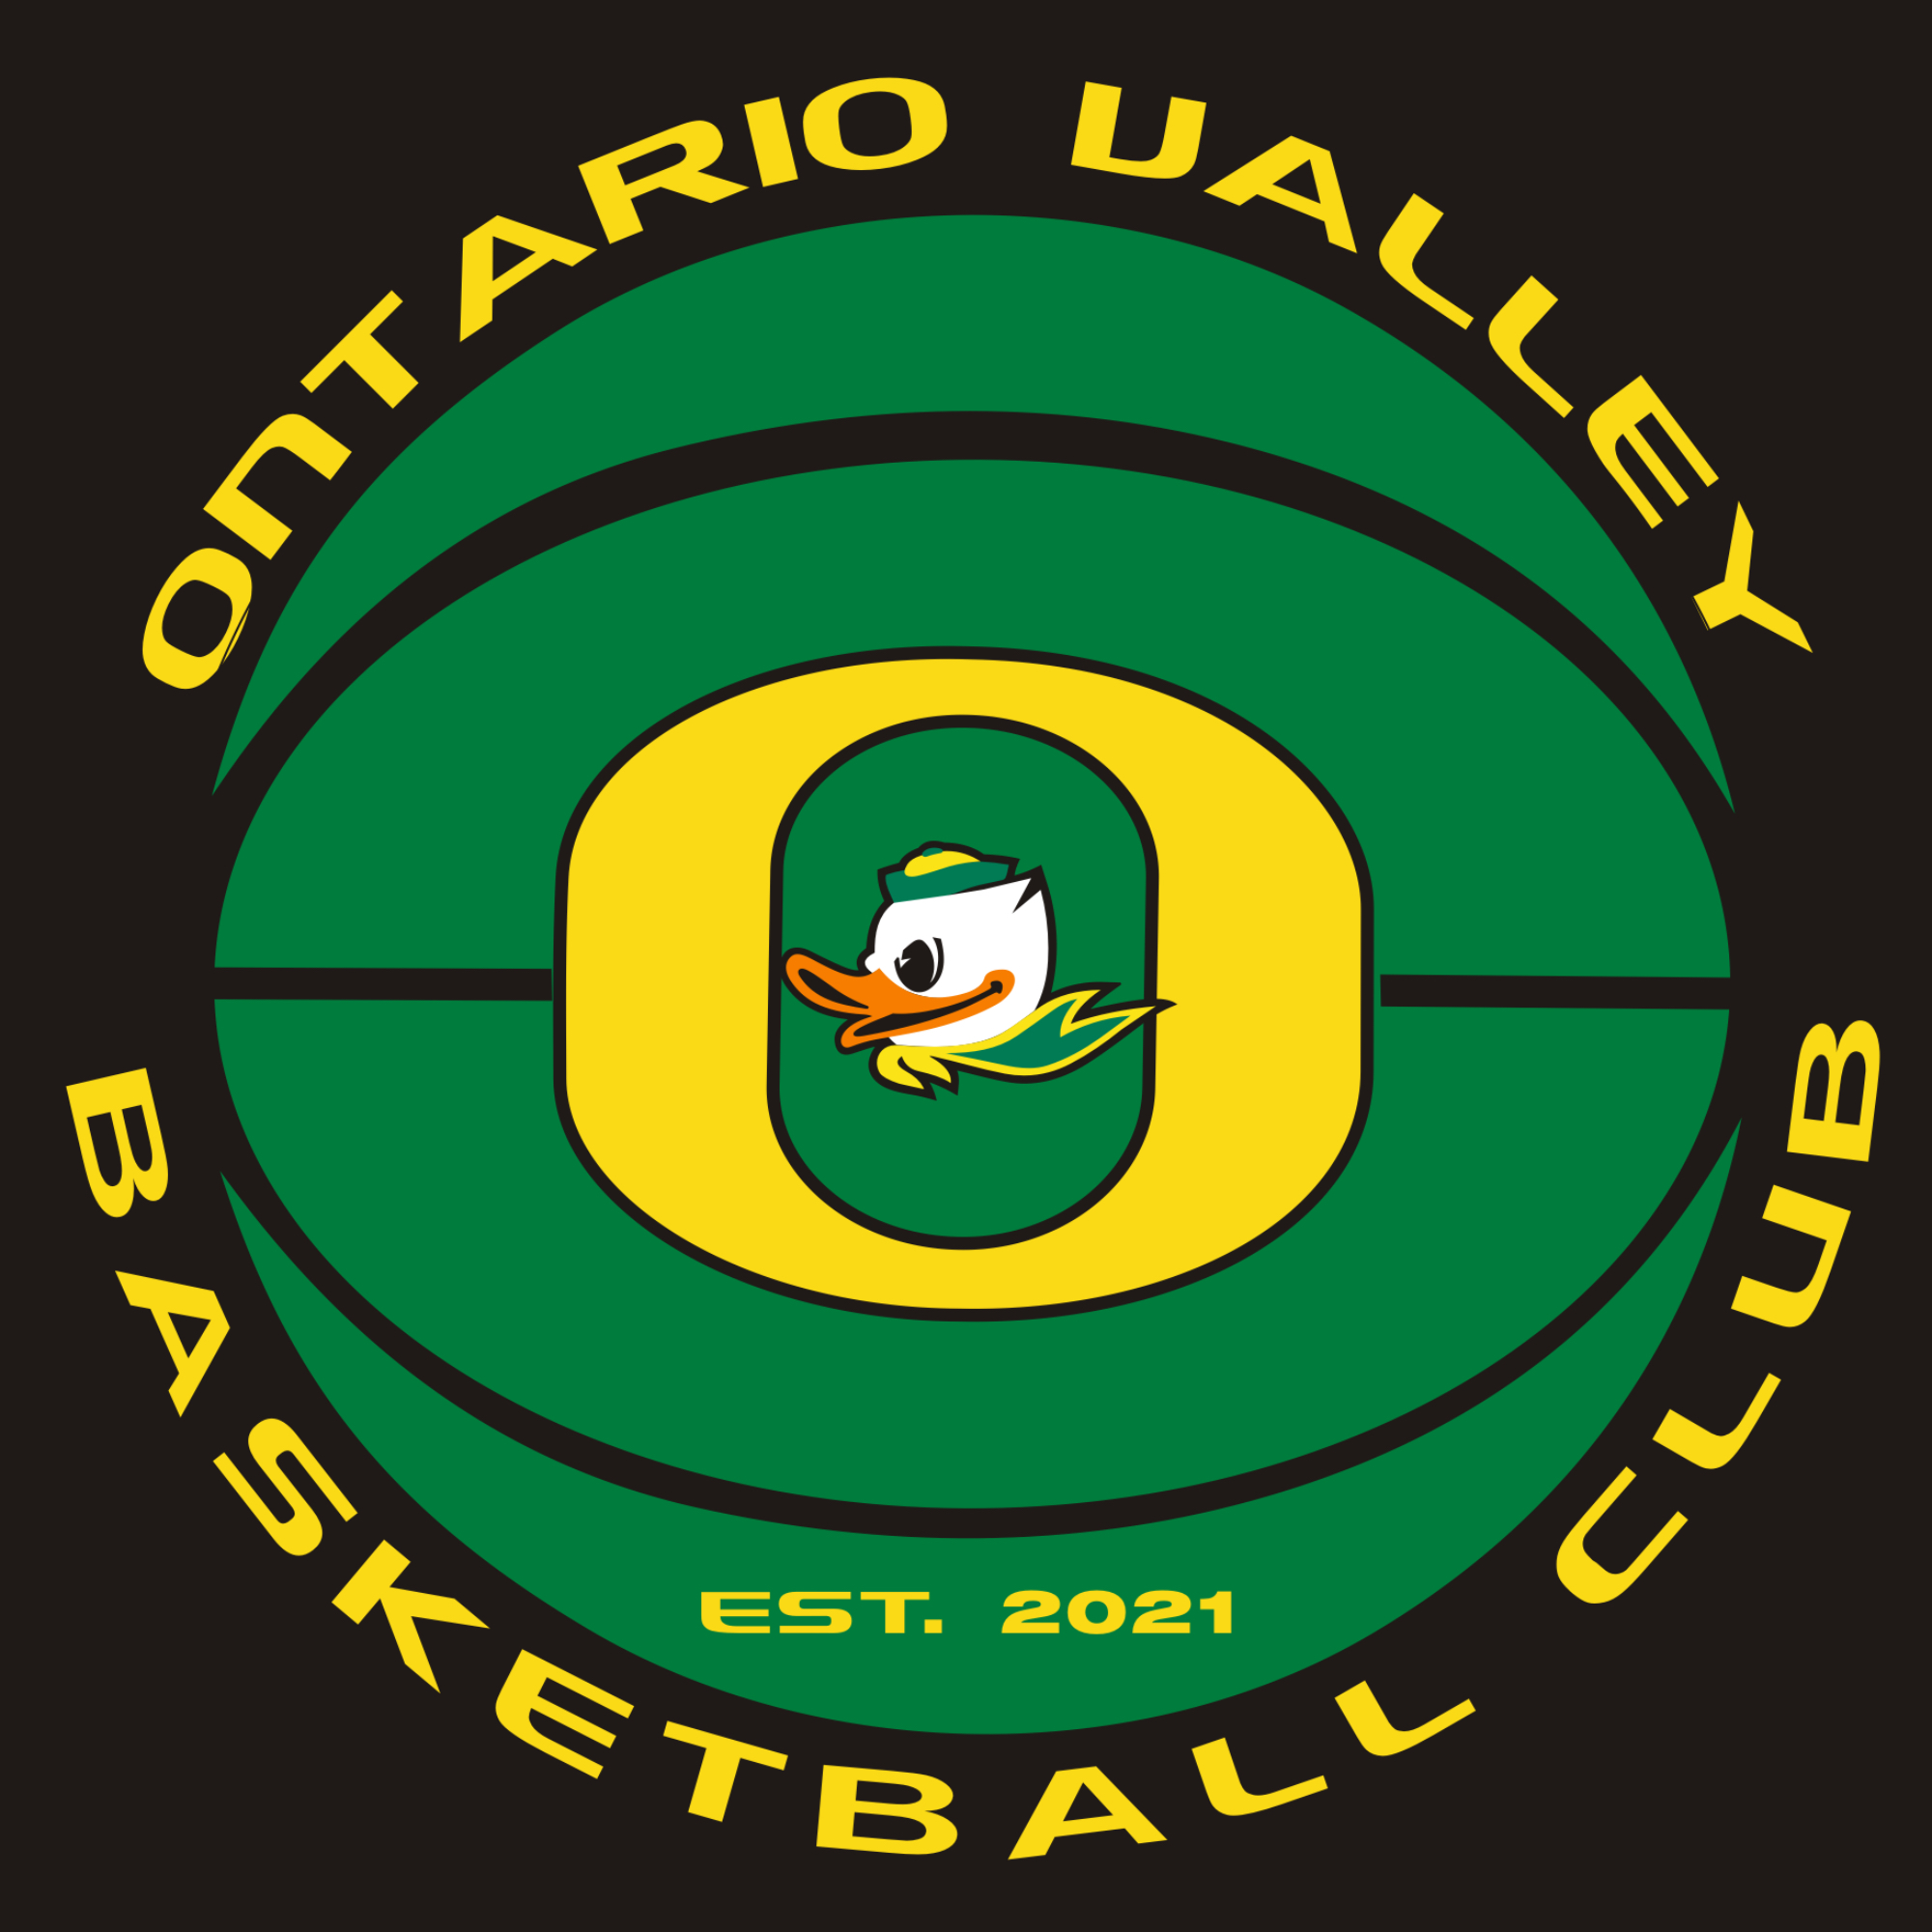 The official logo of Ontario Valley Basketball Club